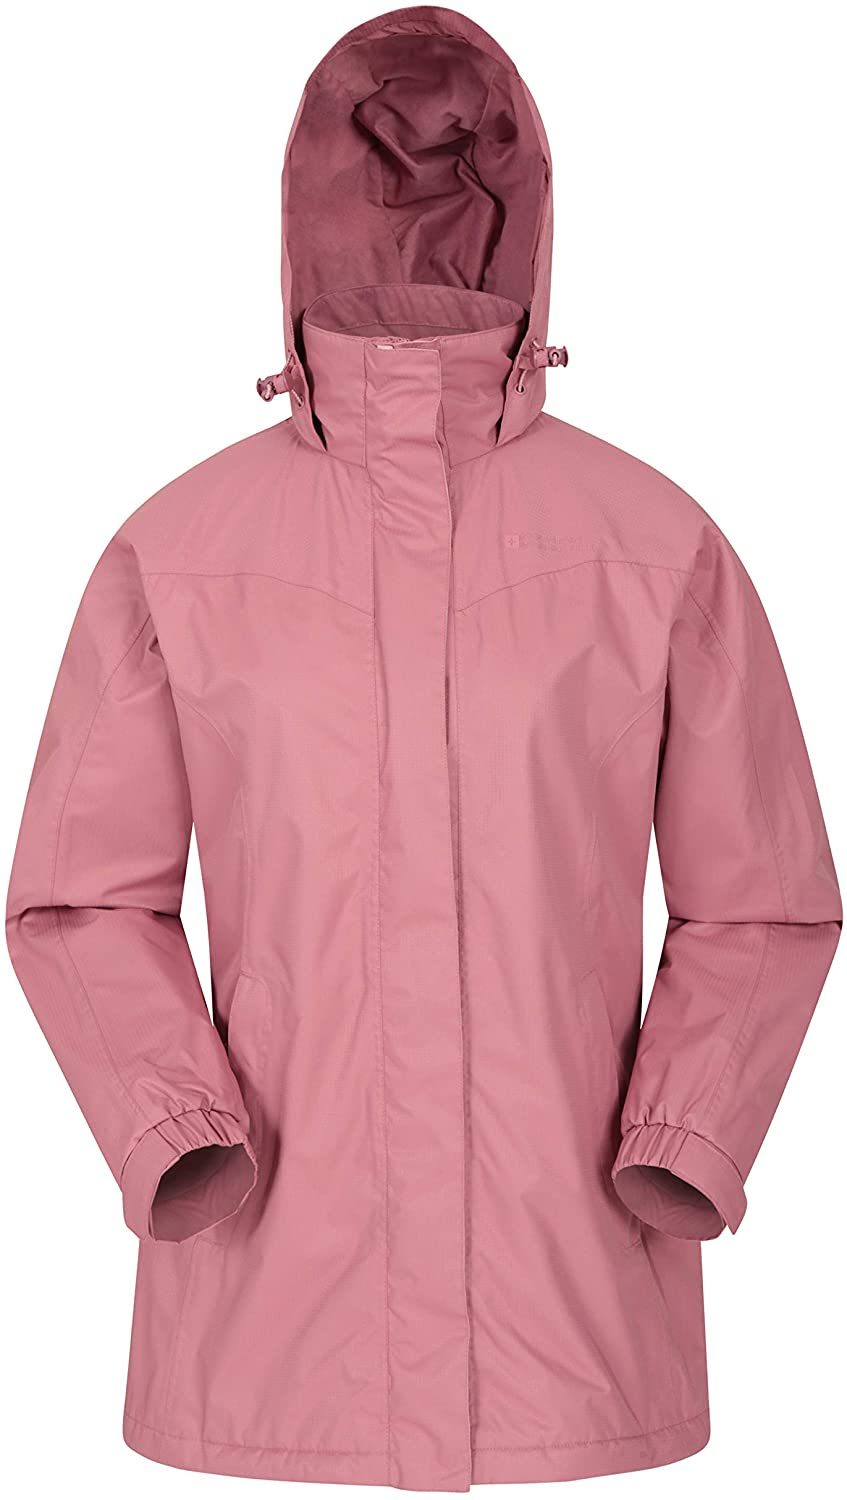 Warehouse Guelder Womens Winter Long Jacket - Waterproof Rain Coat, Zipped Ladies Coat, Taped Seams, Pack Away Hoodie, Casual Jacket - for Autumn Travelling